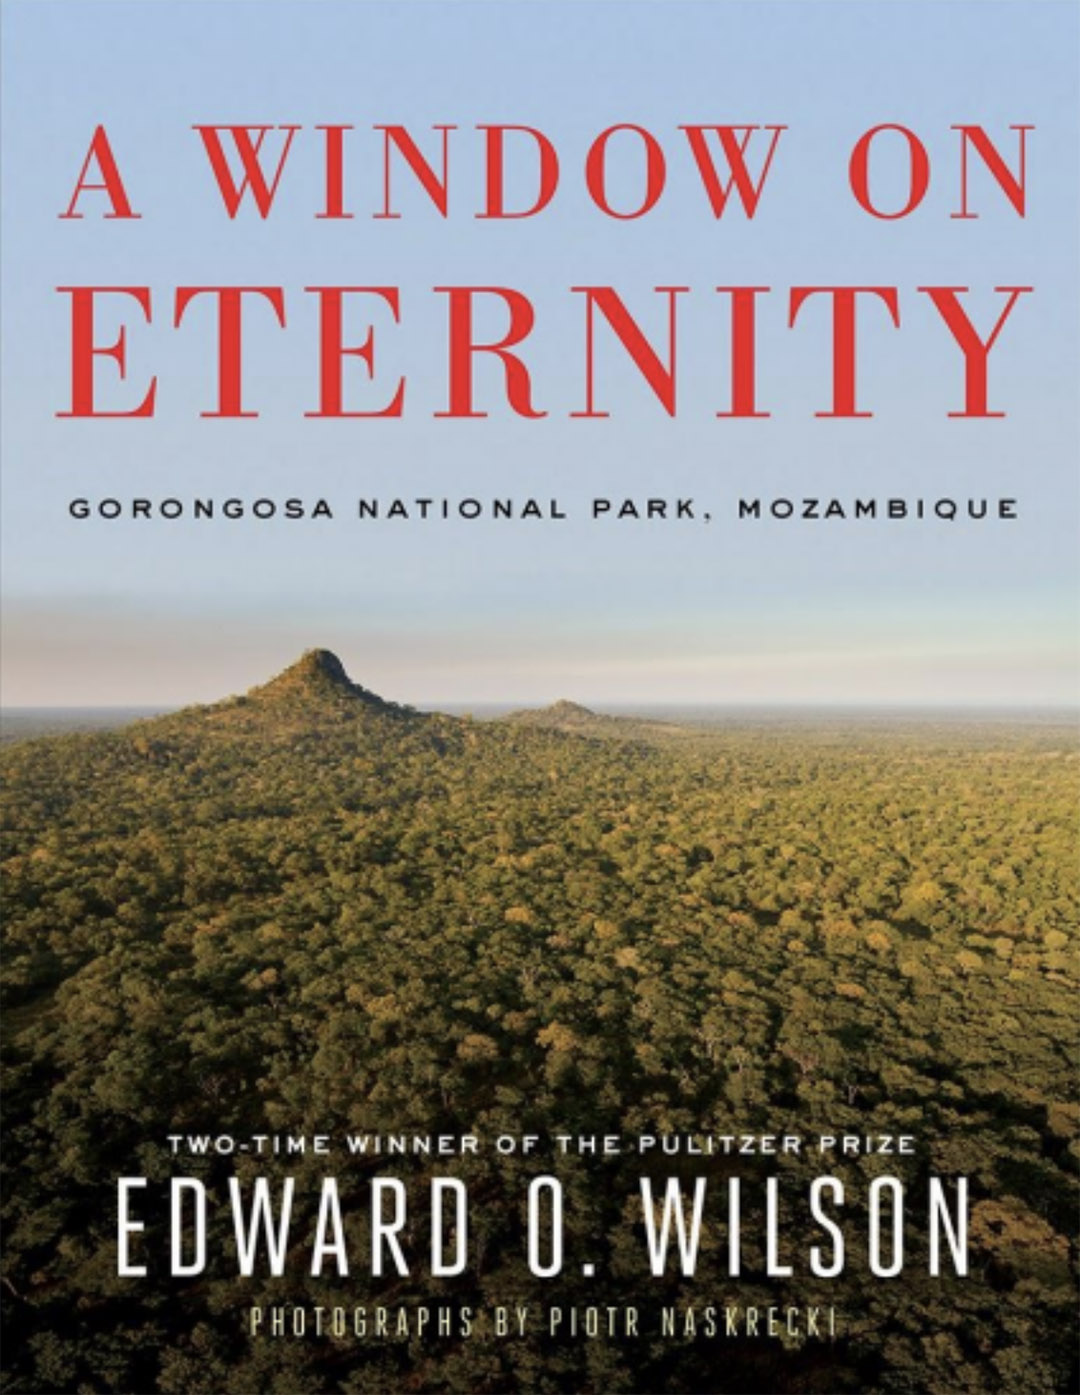 A Window on Eternity - EO Wilson - photography by Piotr Naskrecki